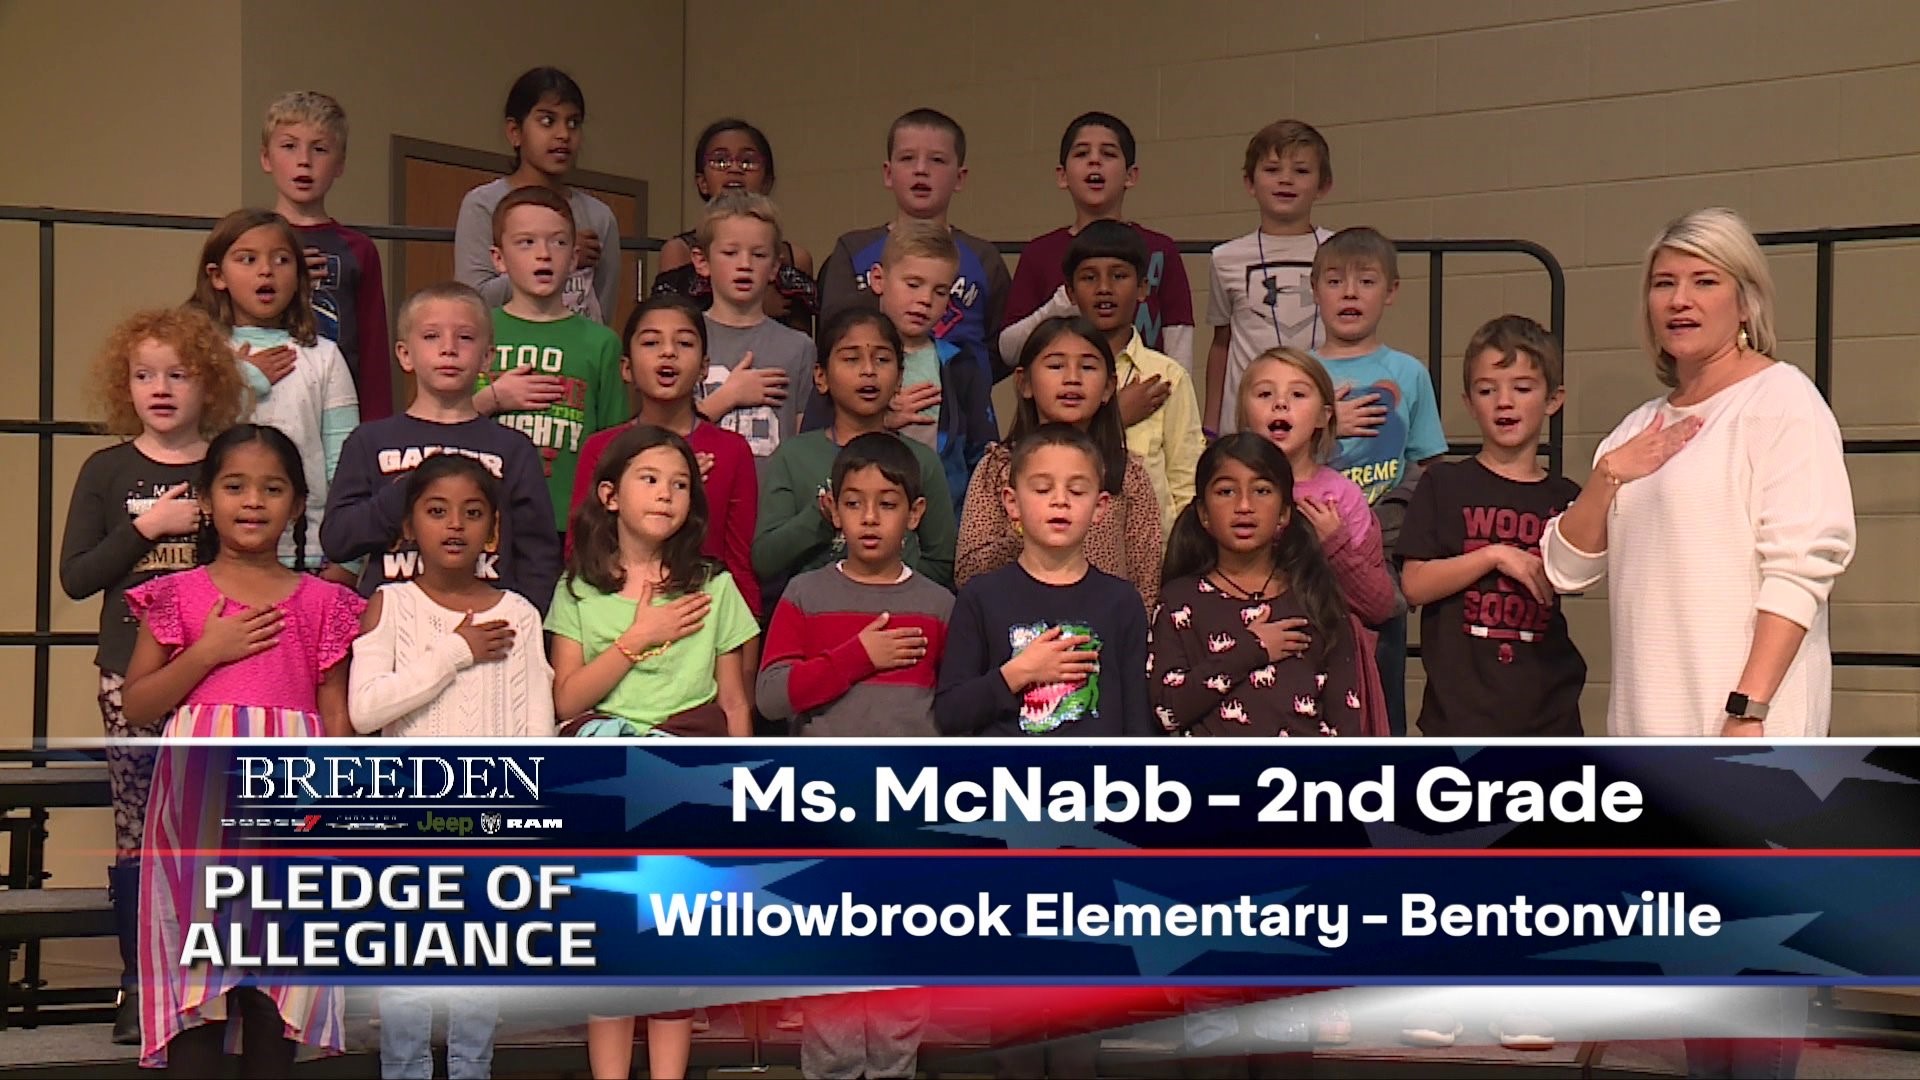 Ms. McNabb 2nd Grade Willowbrook Elementary, Bentonville